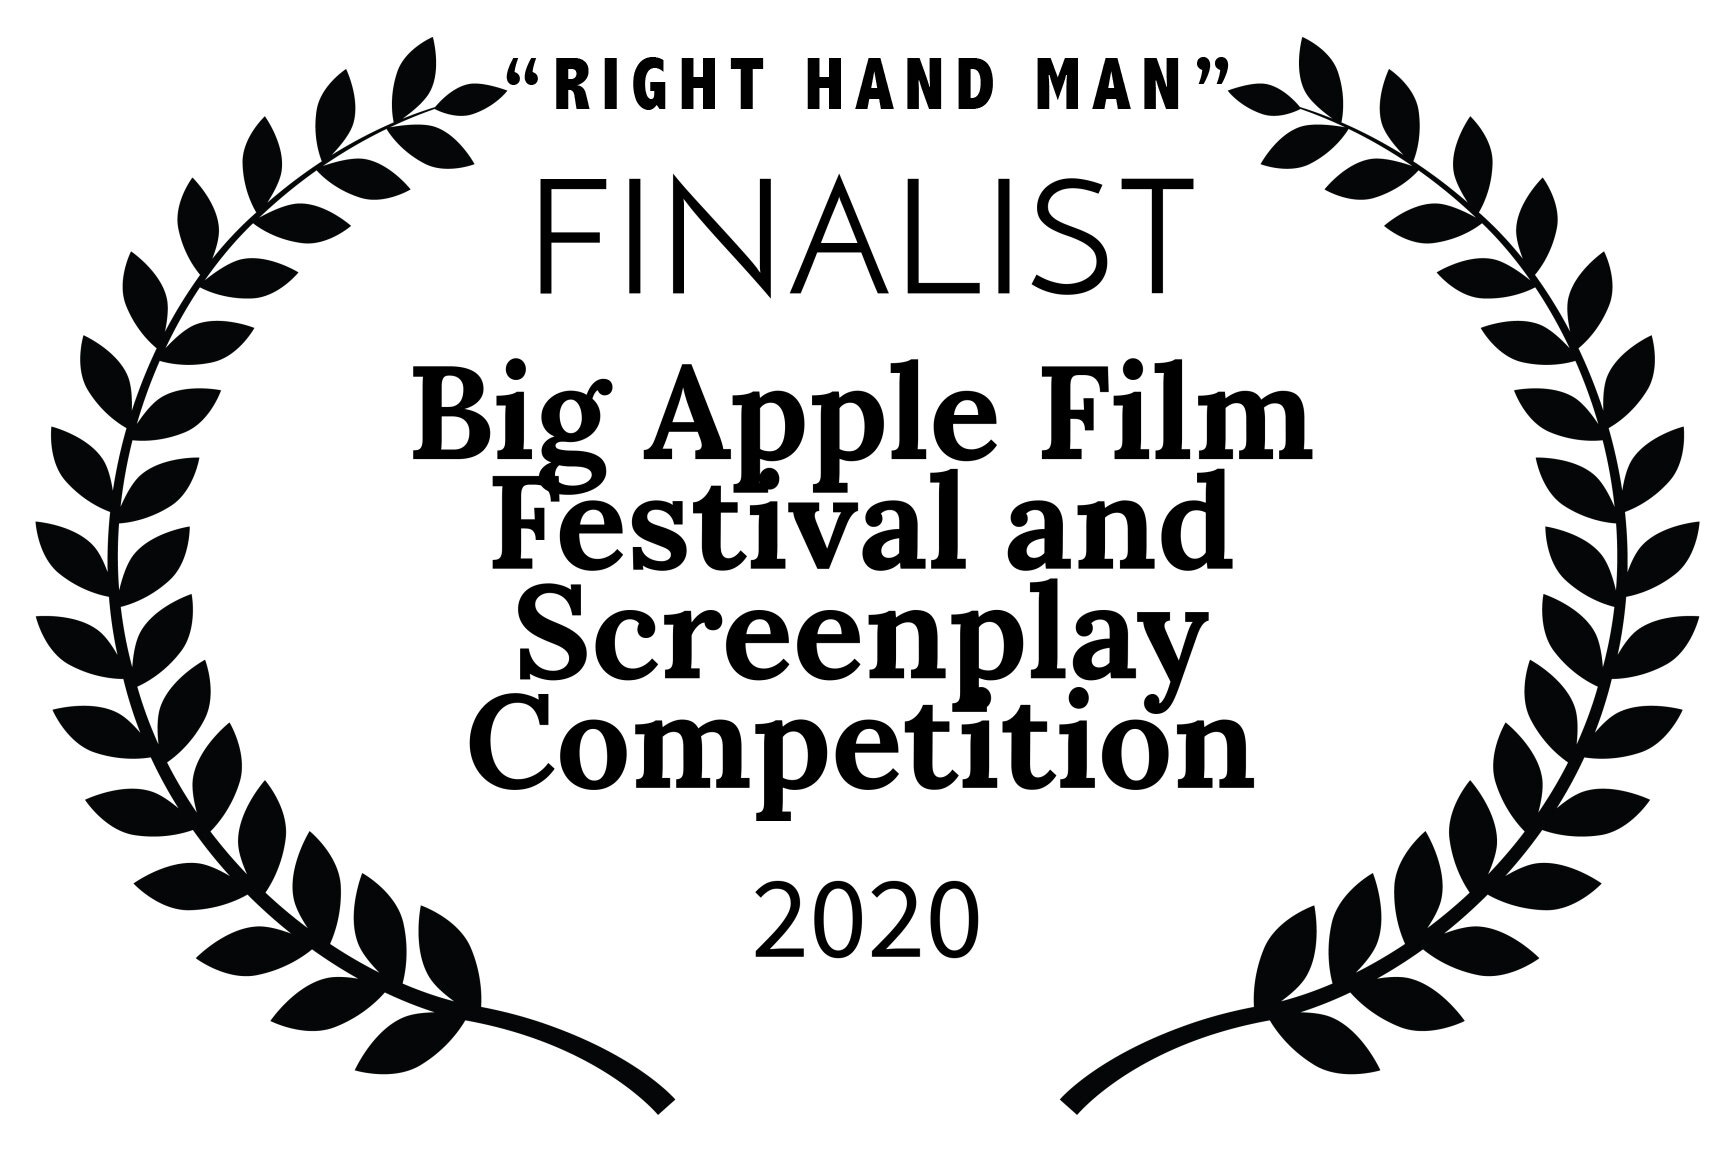 RHMFINALIST - Big Apple Film Festival and Screenplay Competition - 2020 copy.jpg